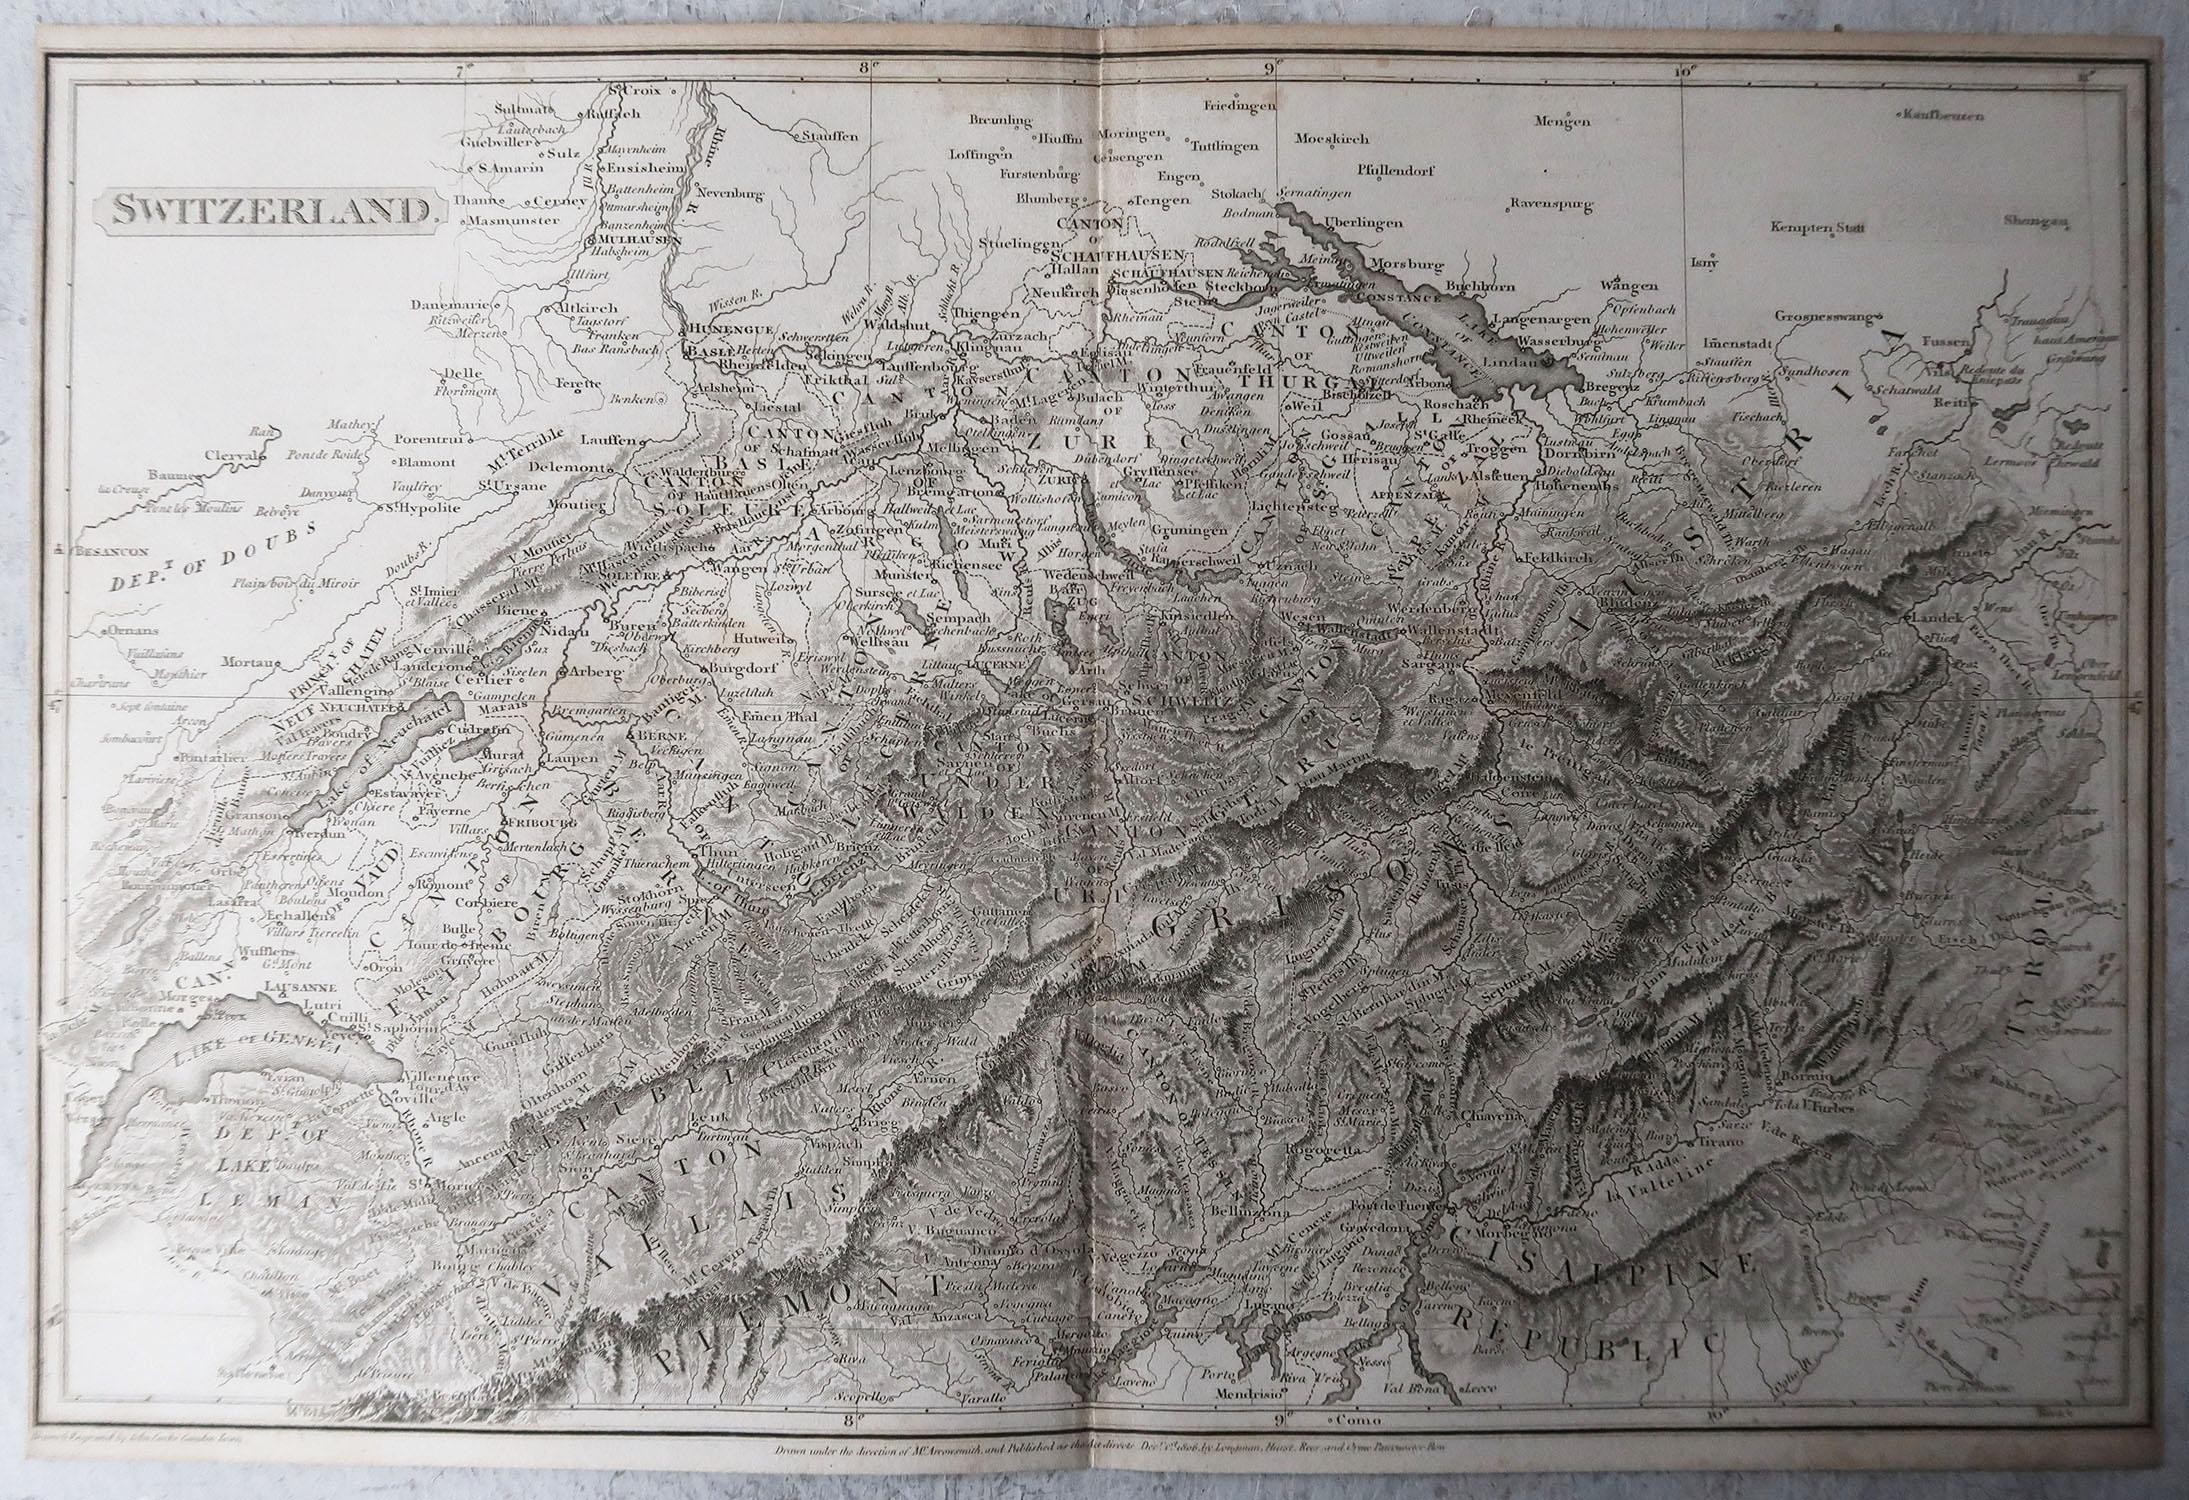 Other Original Antique Map of Switzerland, Arrowsmith, 1820